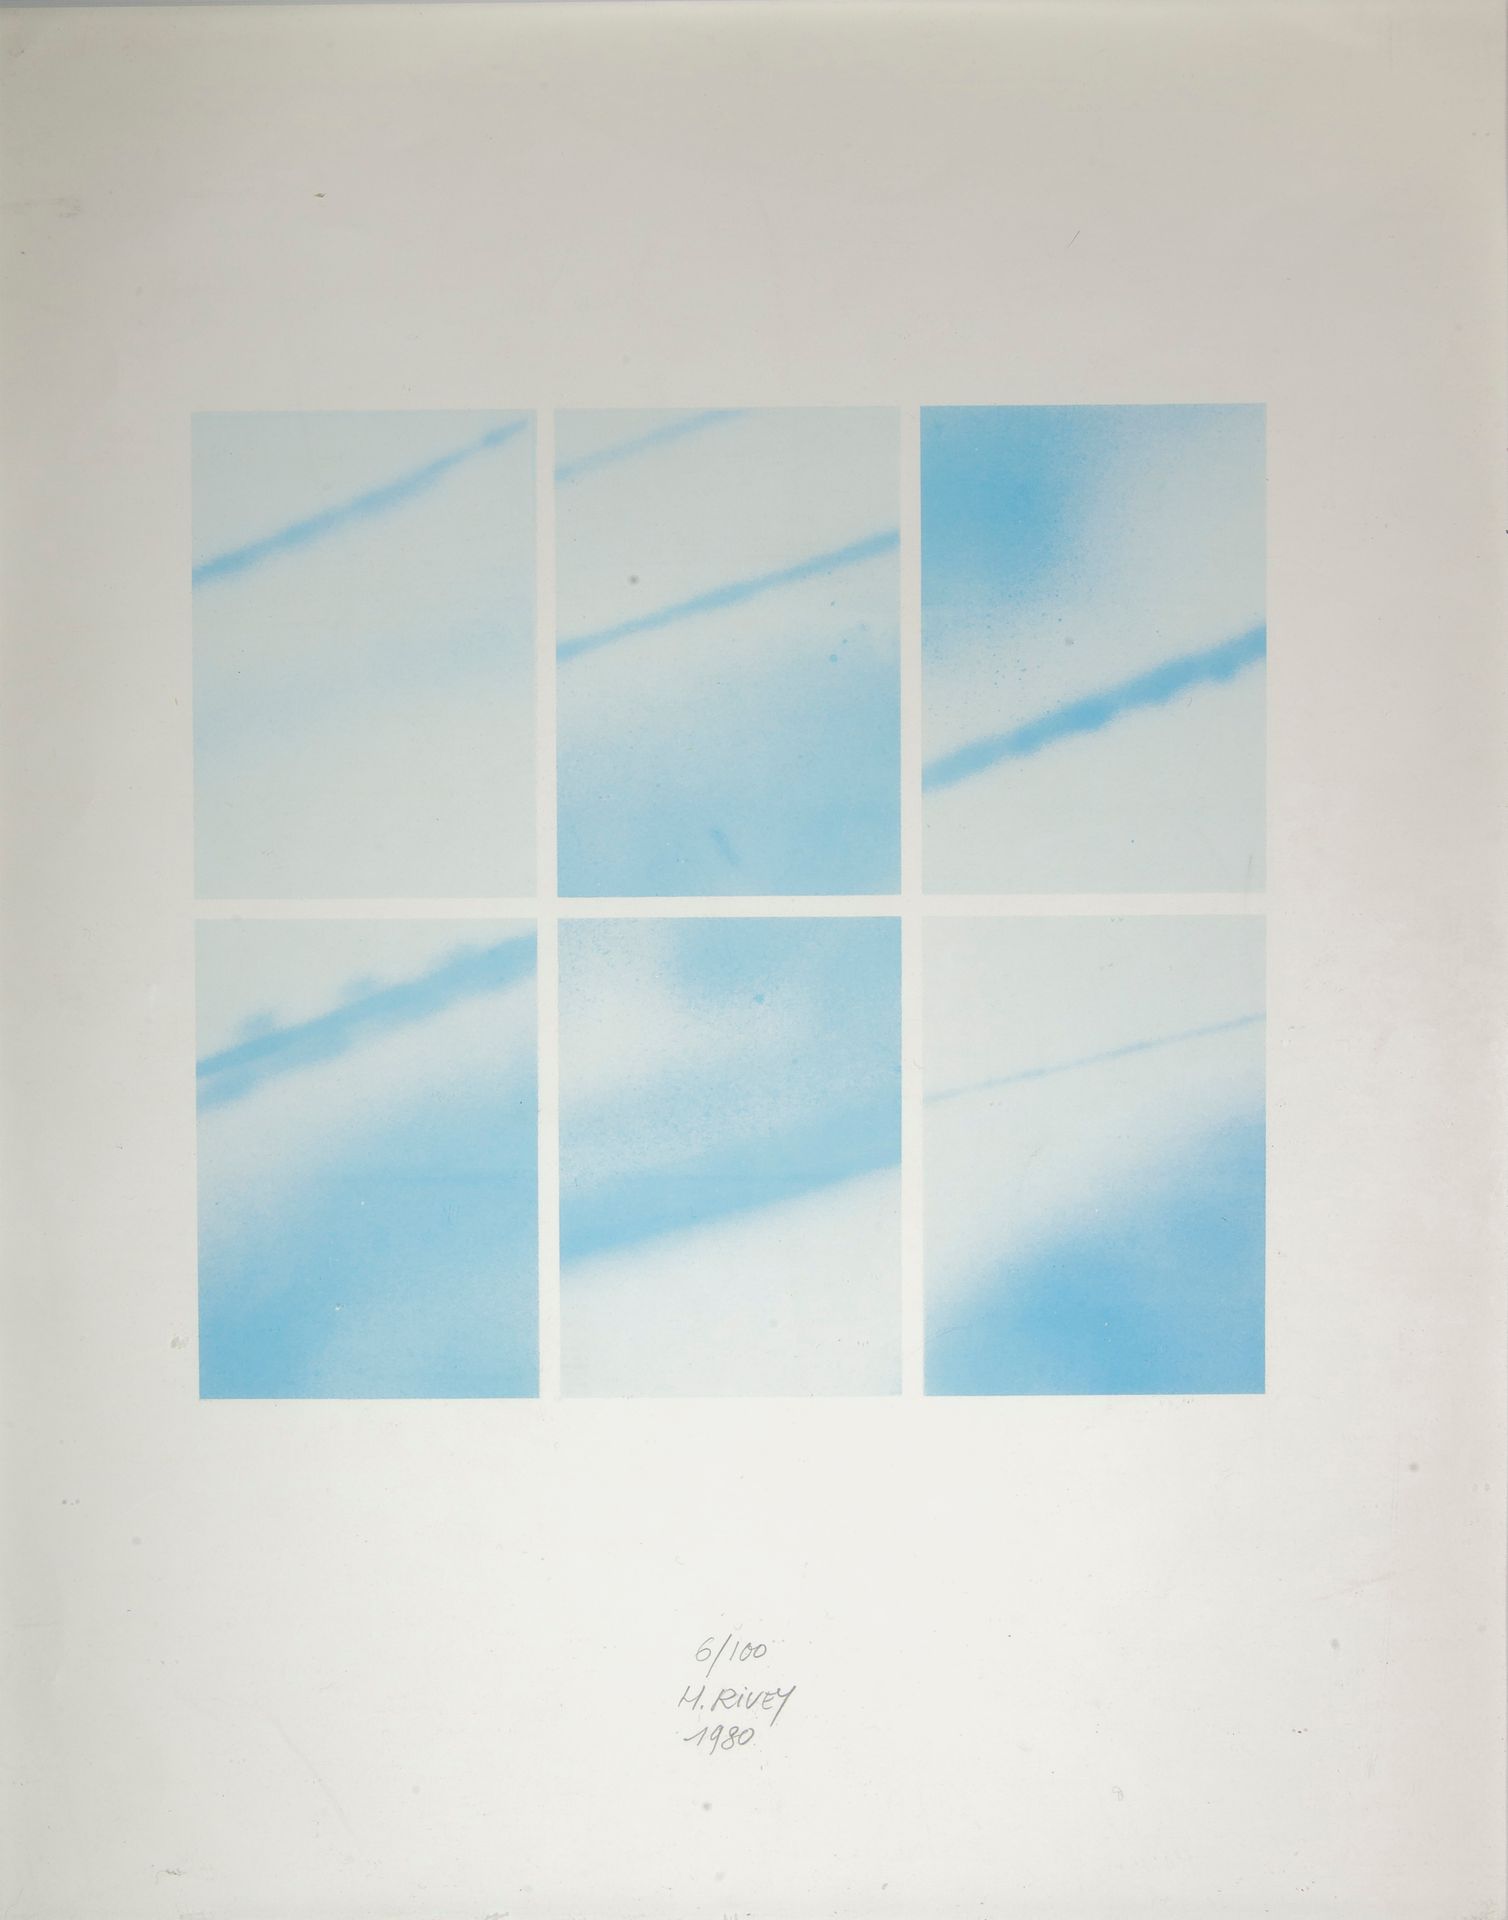 H. RIVEY, 摘要构成

印刷品中央下方有铅笔签名，日期为1980年，编号为6/100

29 x 23 cm 正在观看